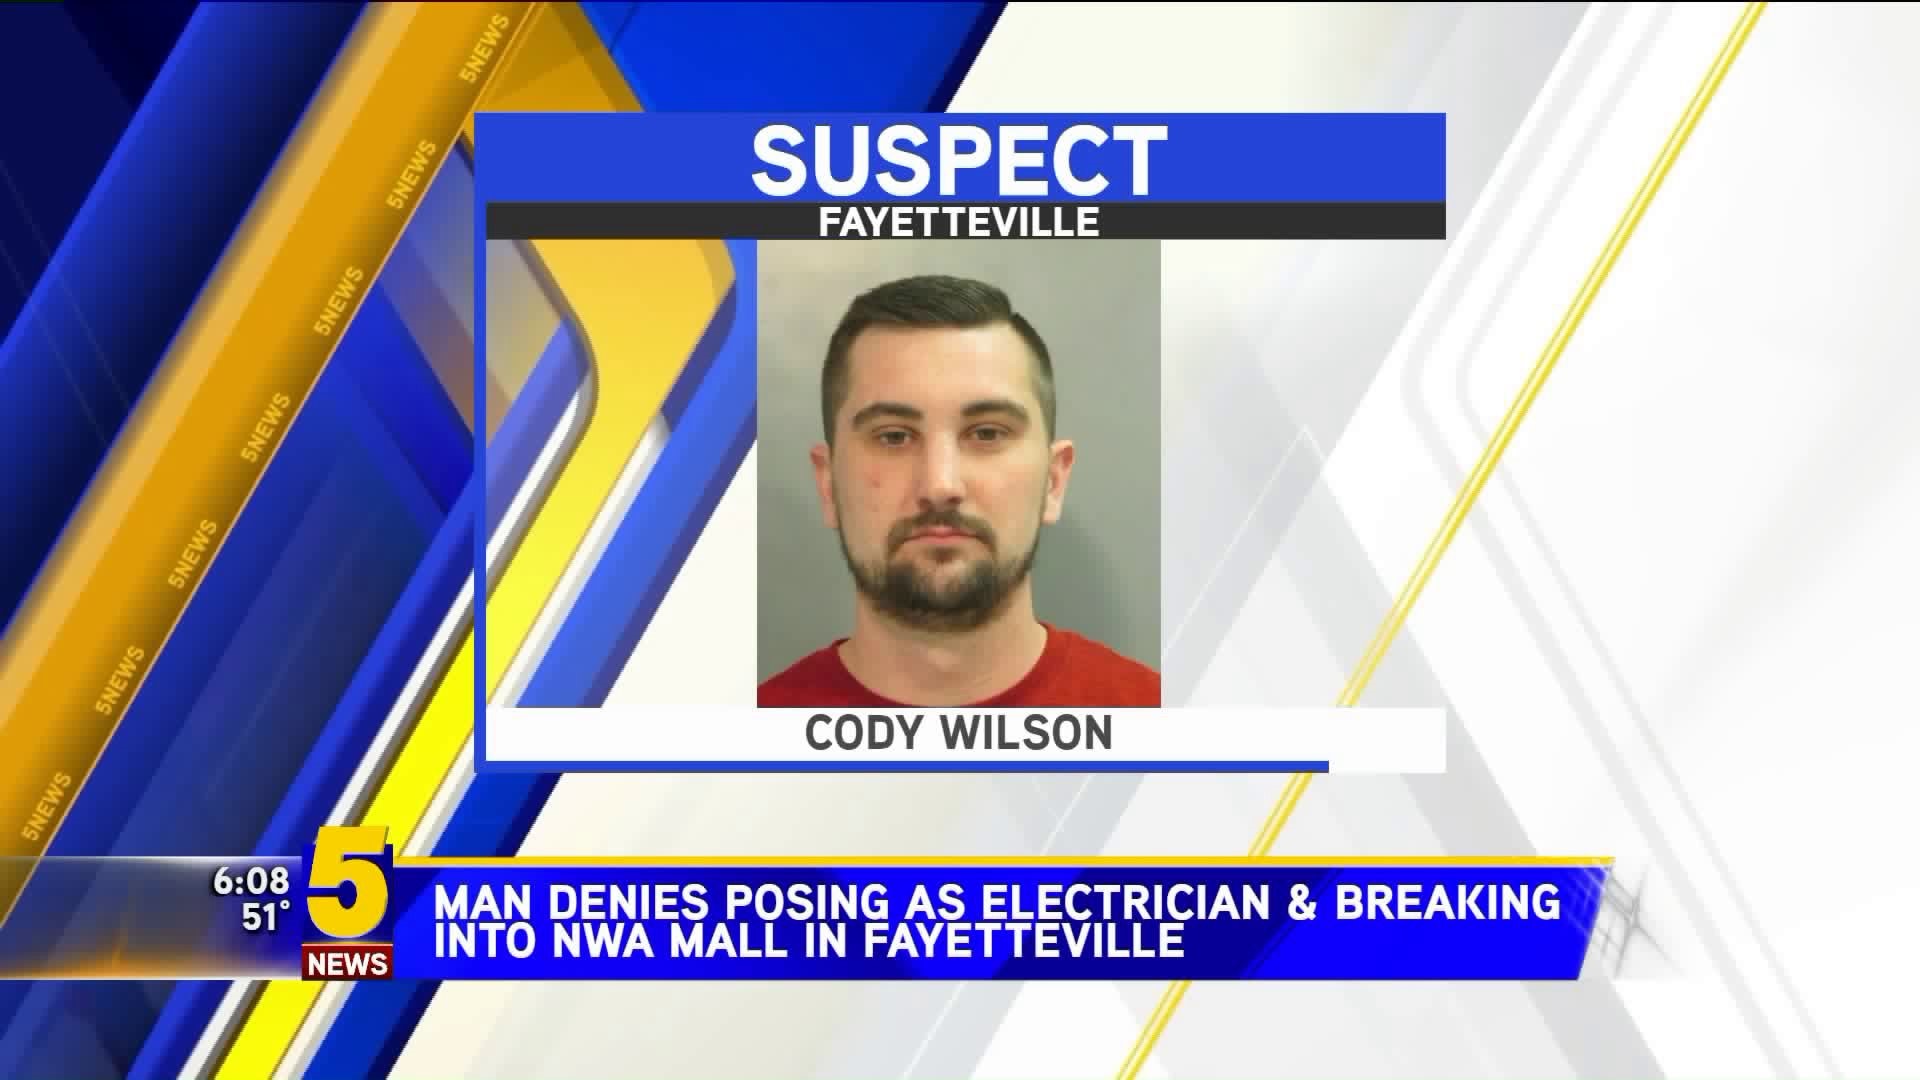 Man Denies Posing As Electrician & Breaking Into NWA Mall In Fayetteville